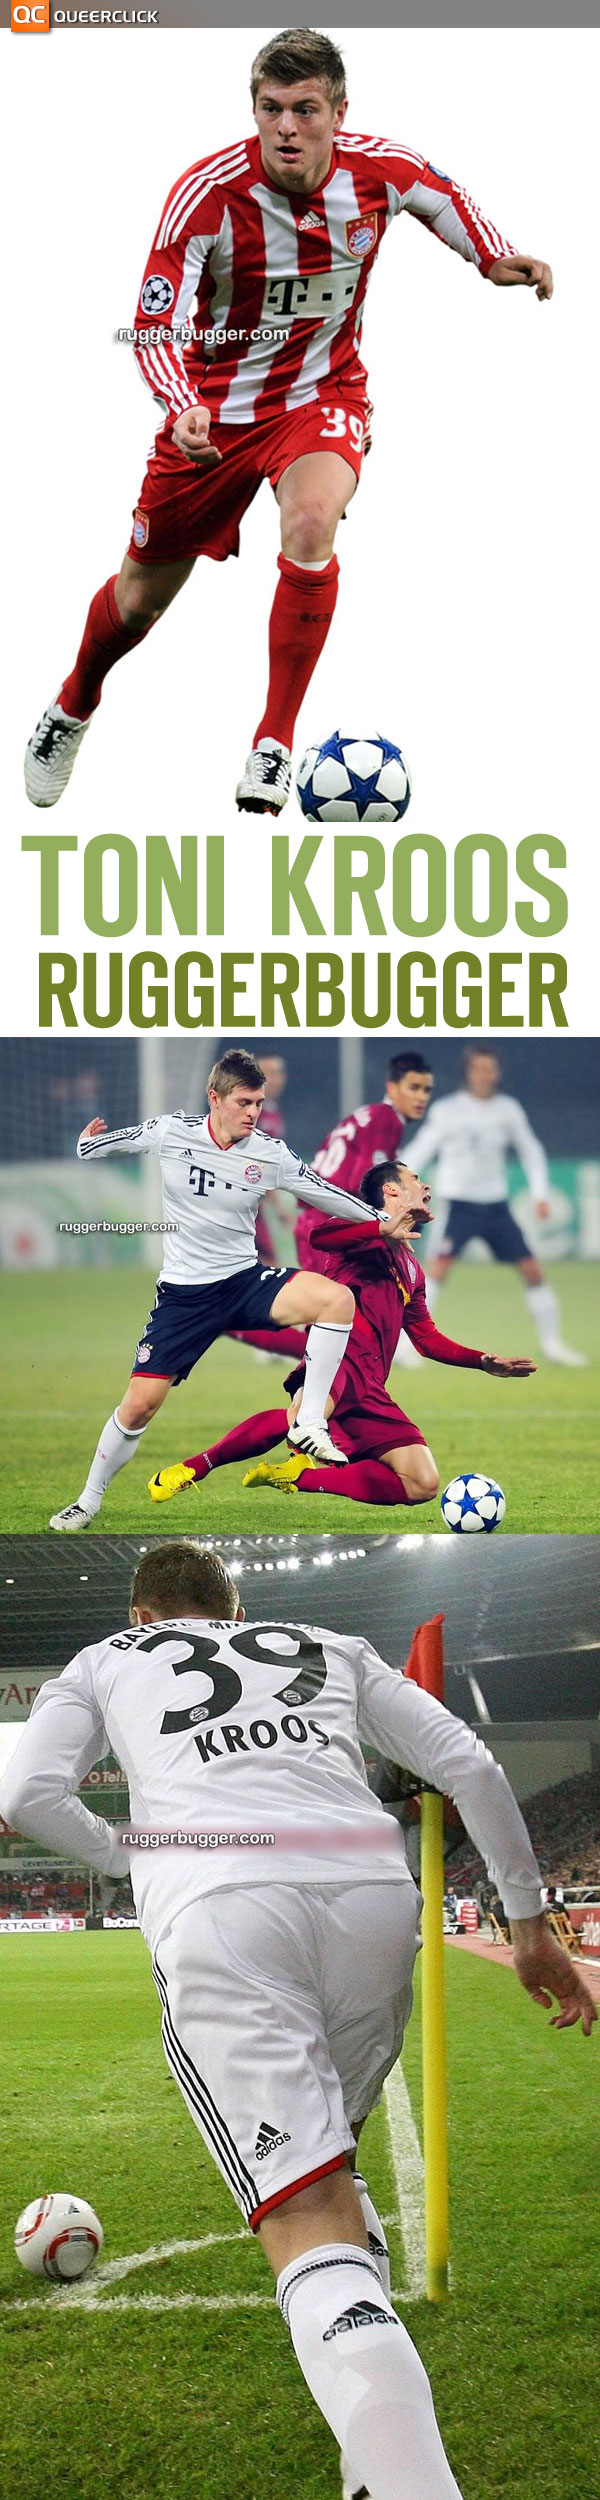 Toni Kroos at Ruggerbugger